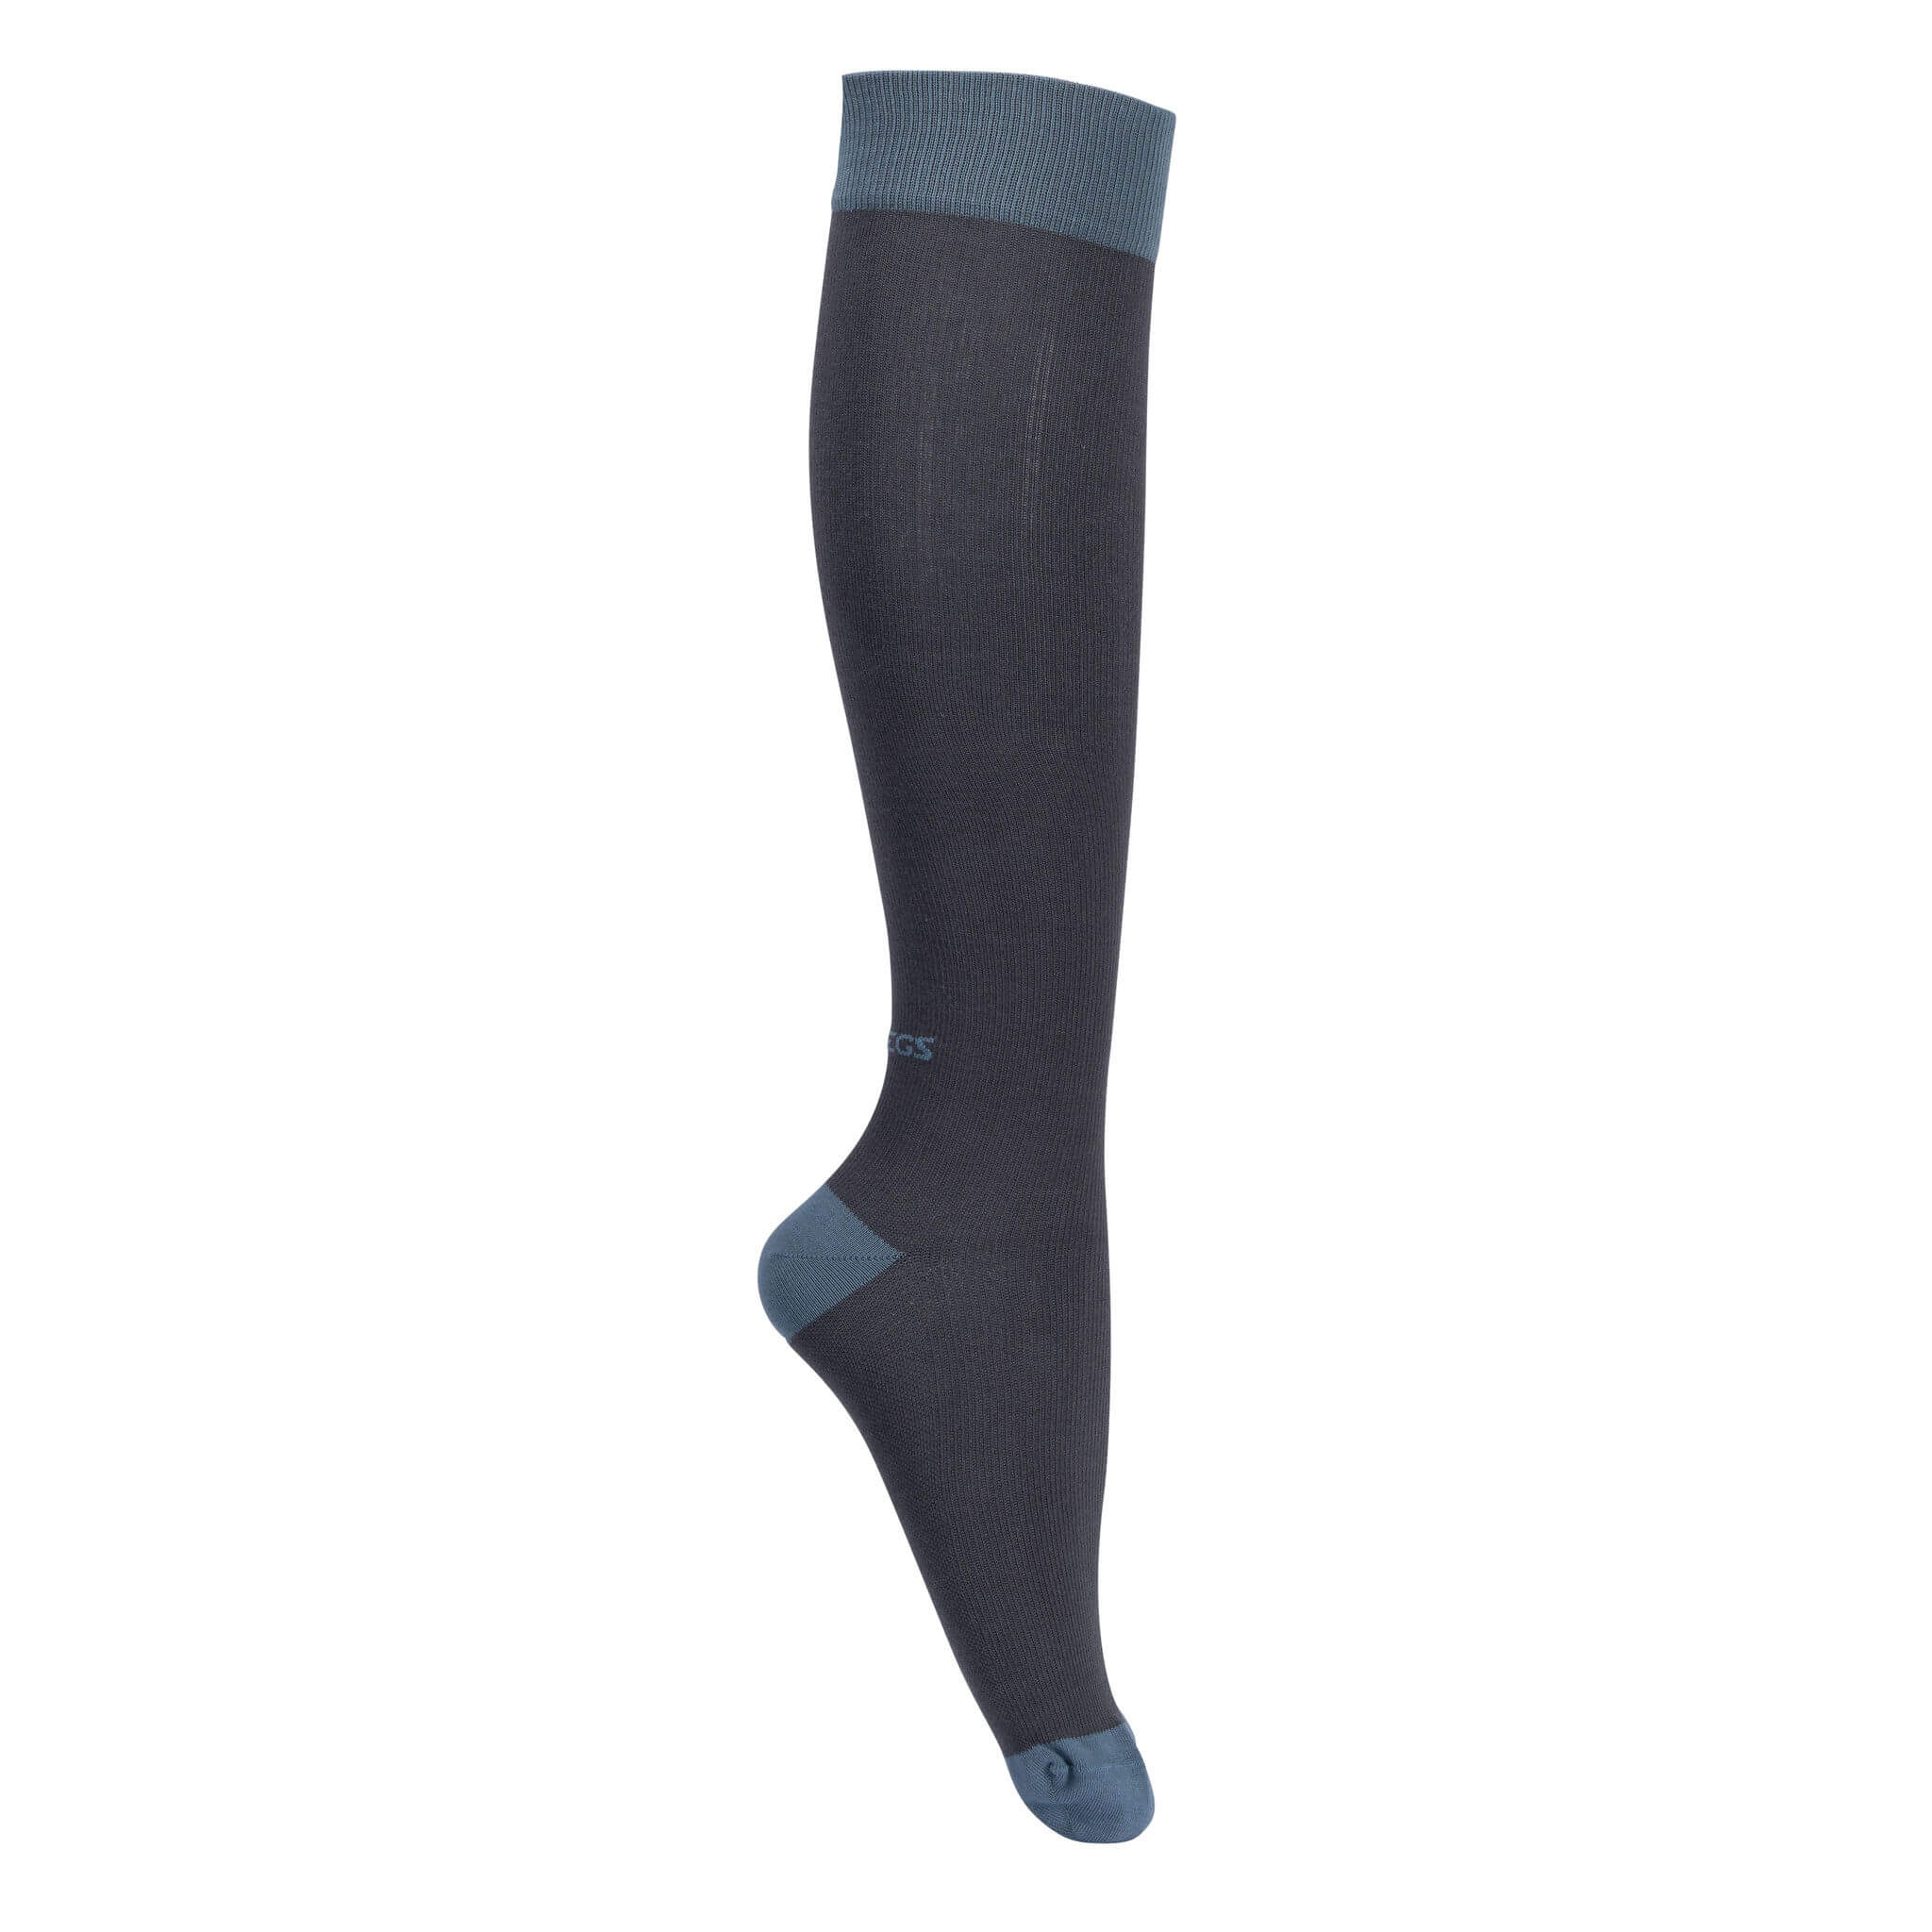 FitLegs - Life Compression Socks - 14-17mmHg for Work, Travel